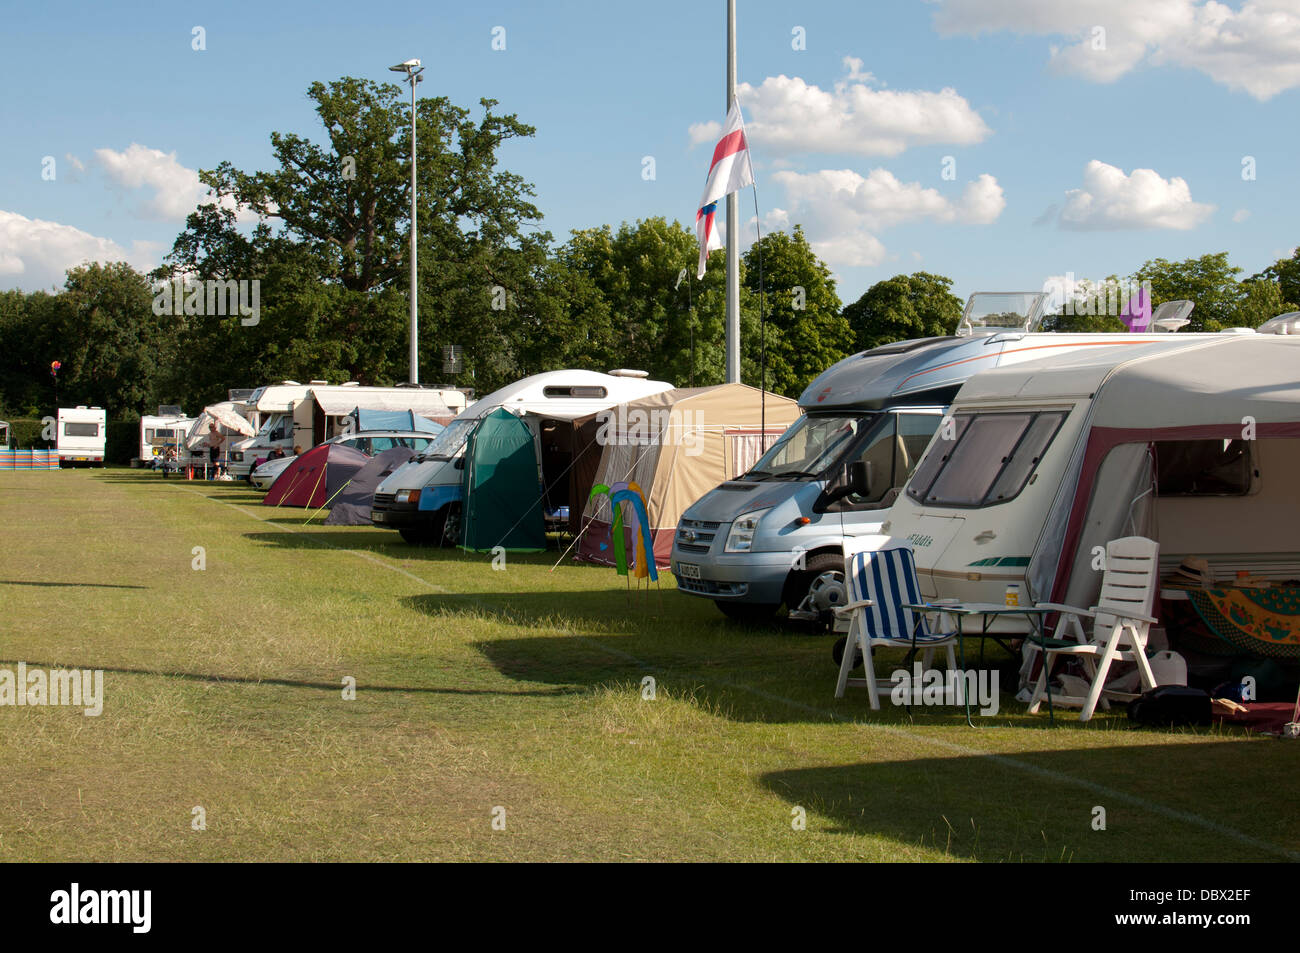 El Warwick Festival Folk camping, Warwick, Reino Unido Foto de stock